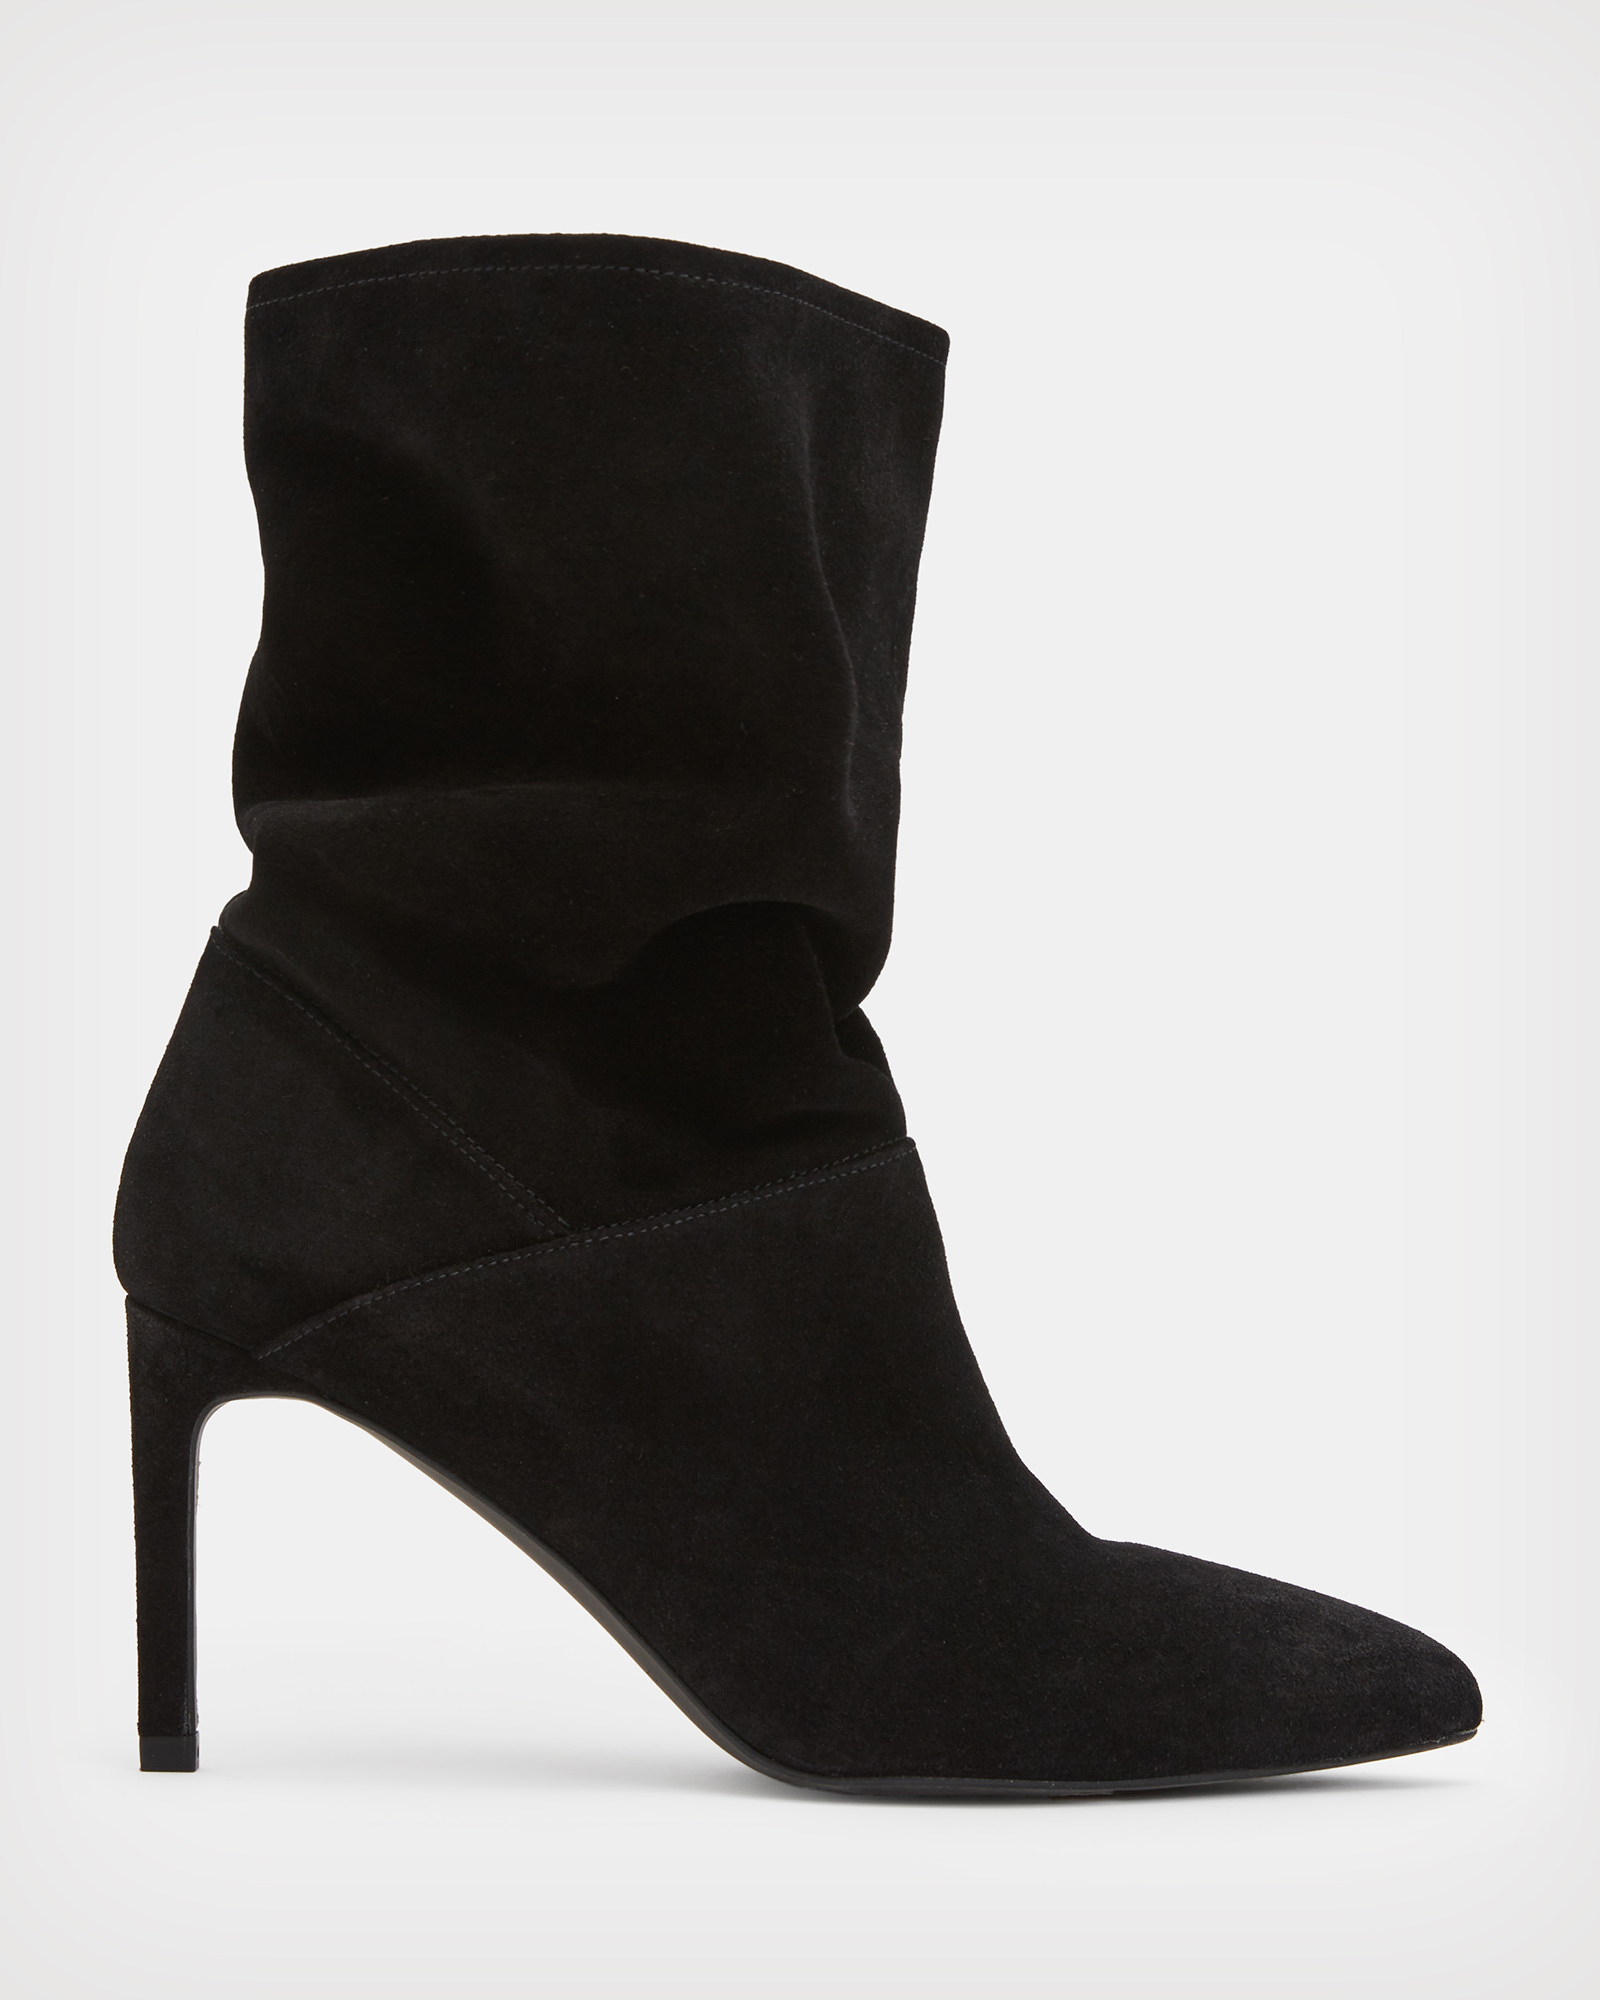 AllSaints Women's Suede Leather Orlana Boots, Black, Size: UK 7/US 10/EU 40